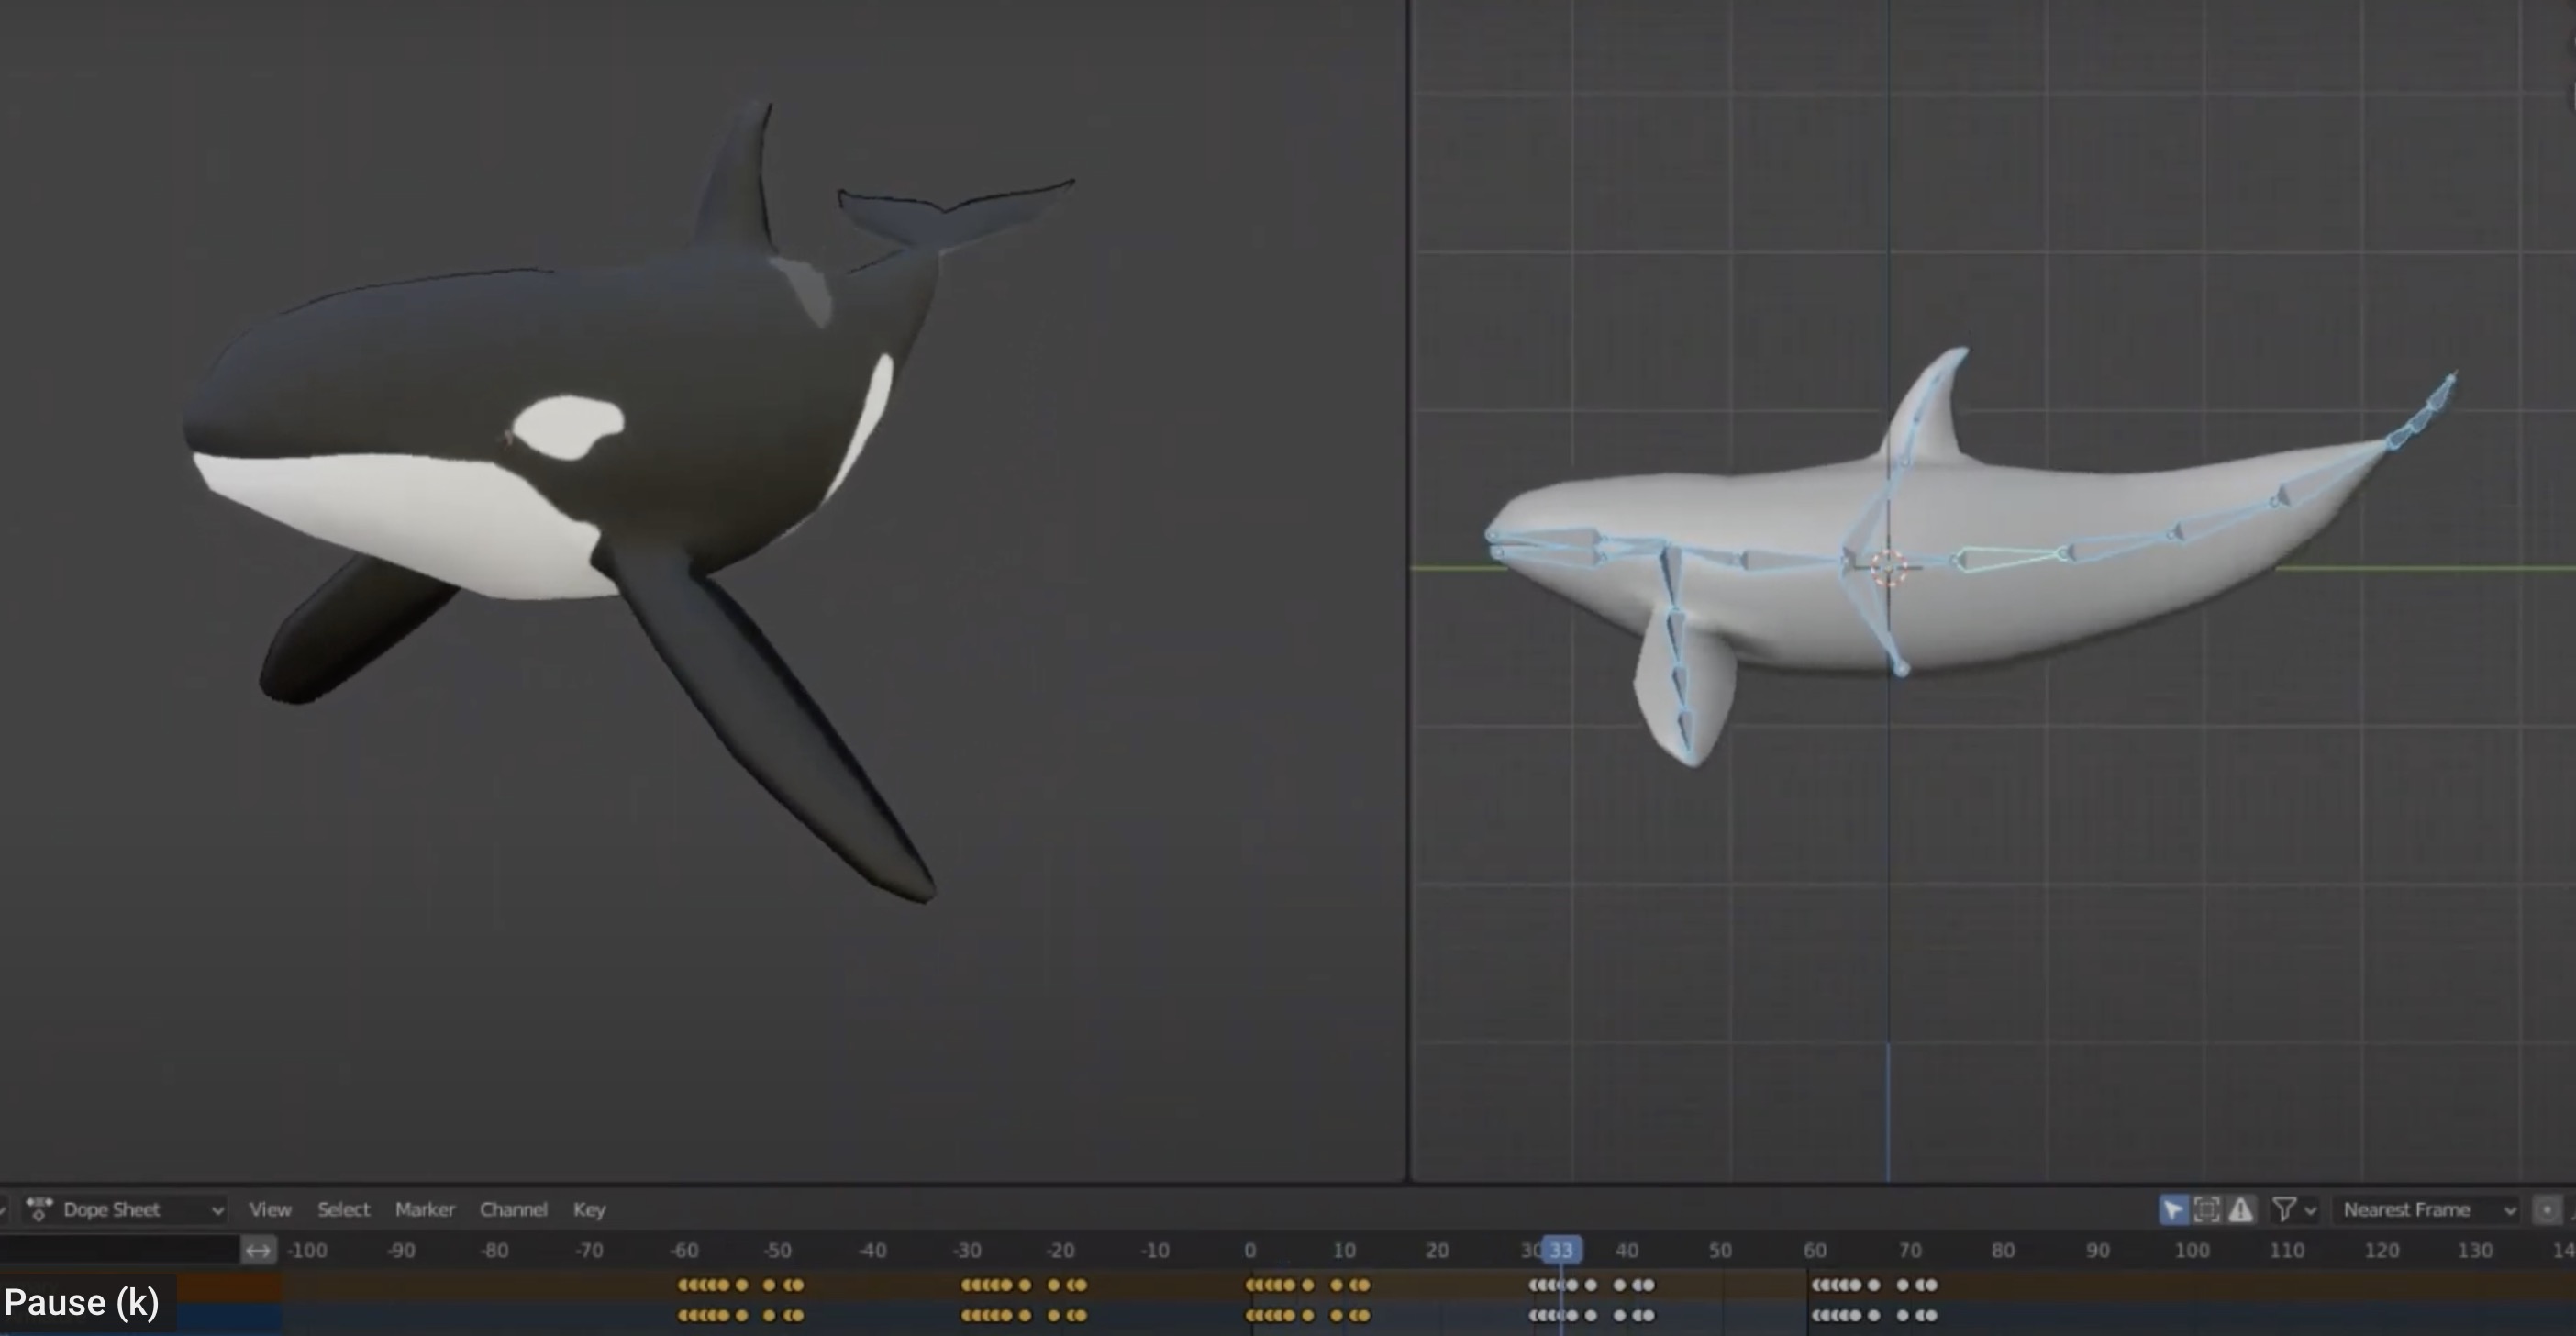 The orca model in progress